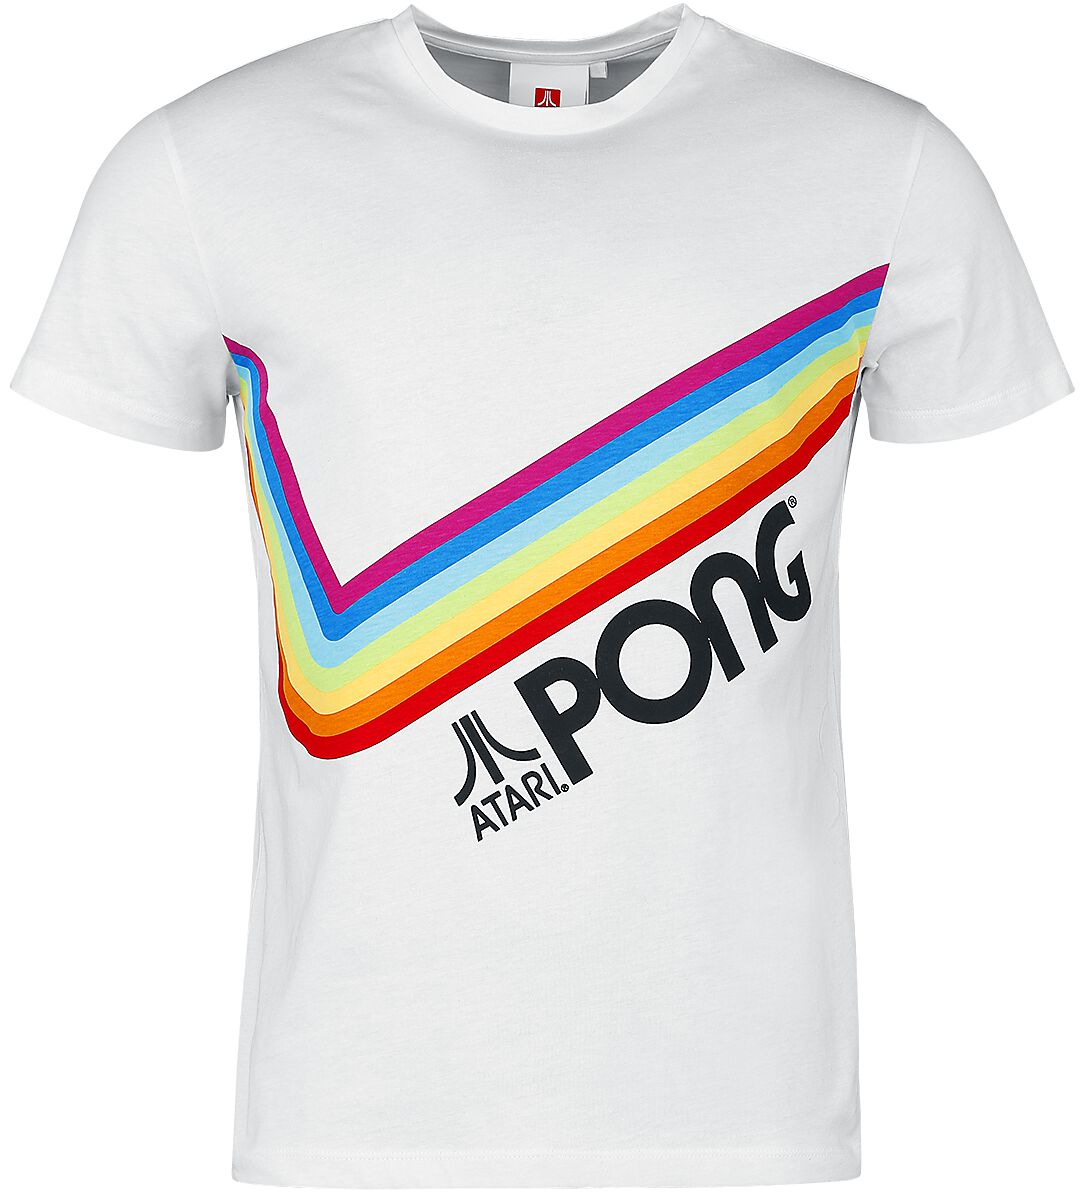 Atari Pong - Pride Rainbow T-Shirt weiß in XL